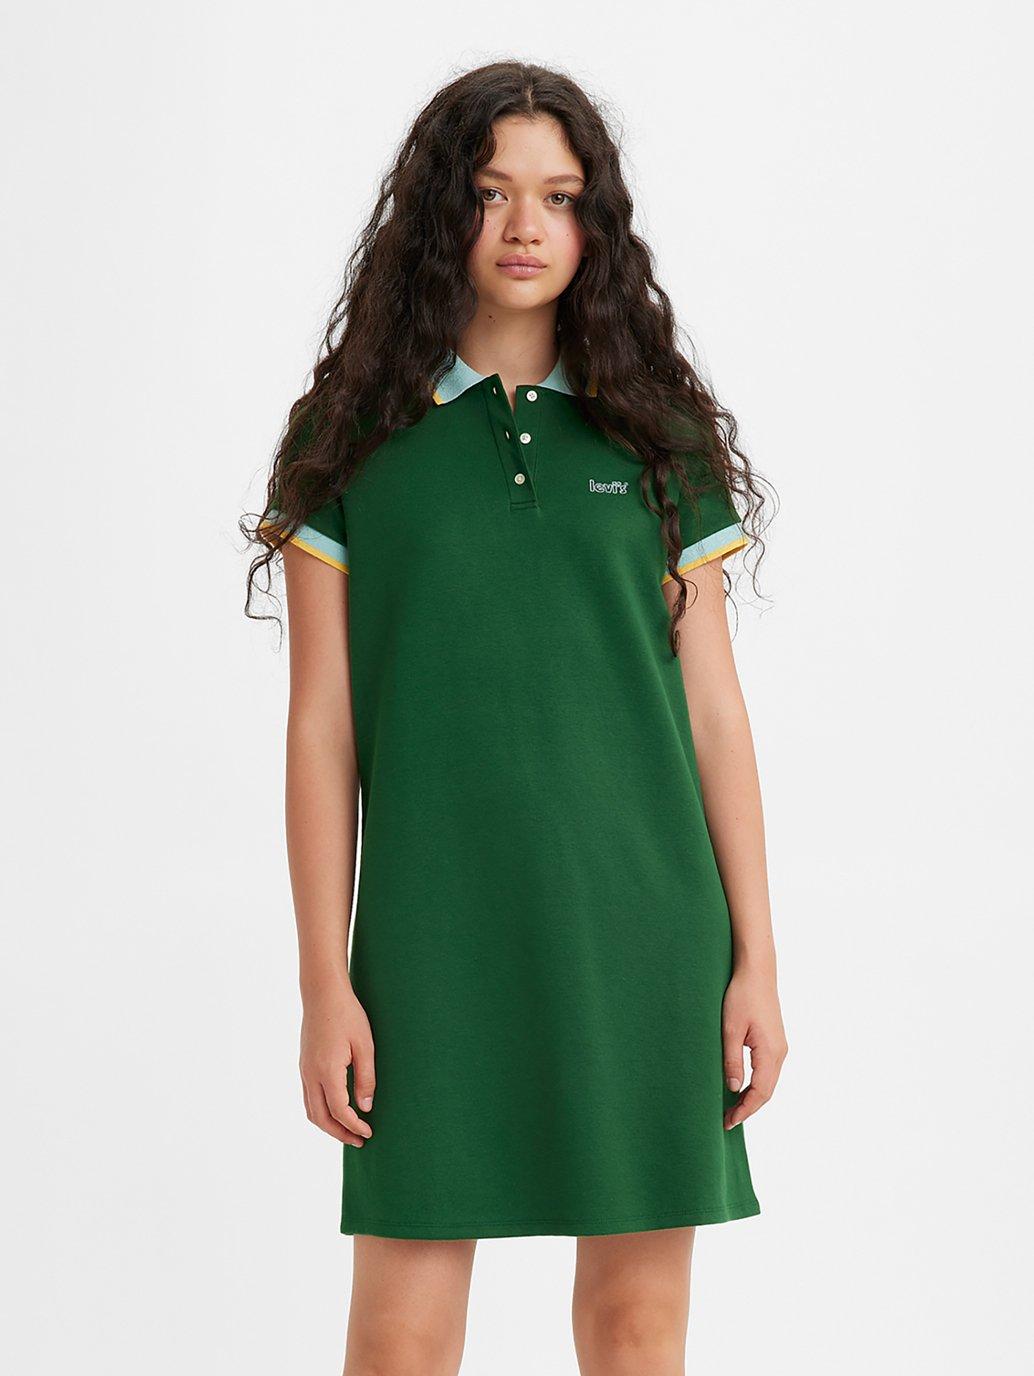 Beli Levi's® Women's Pia Polo Dress | Levi’s® Official Online Store ID